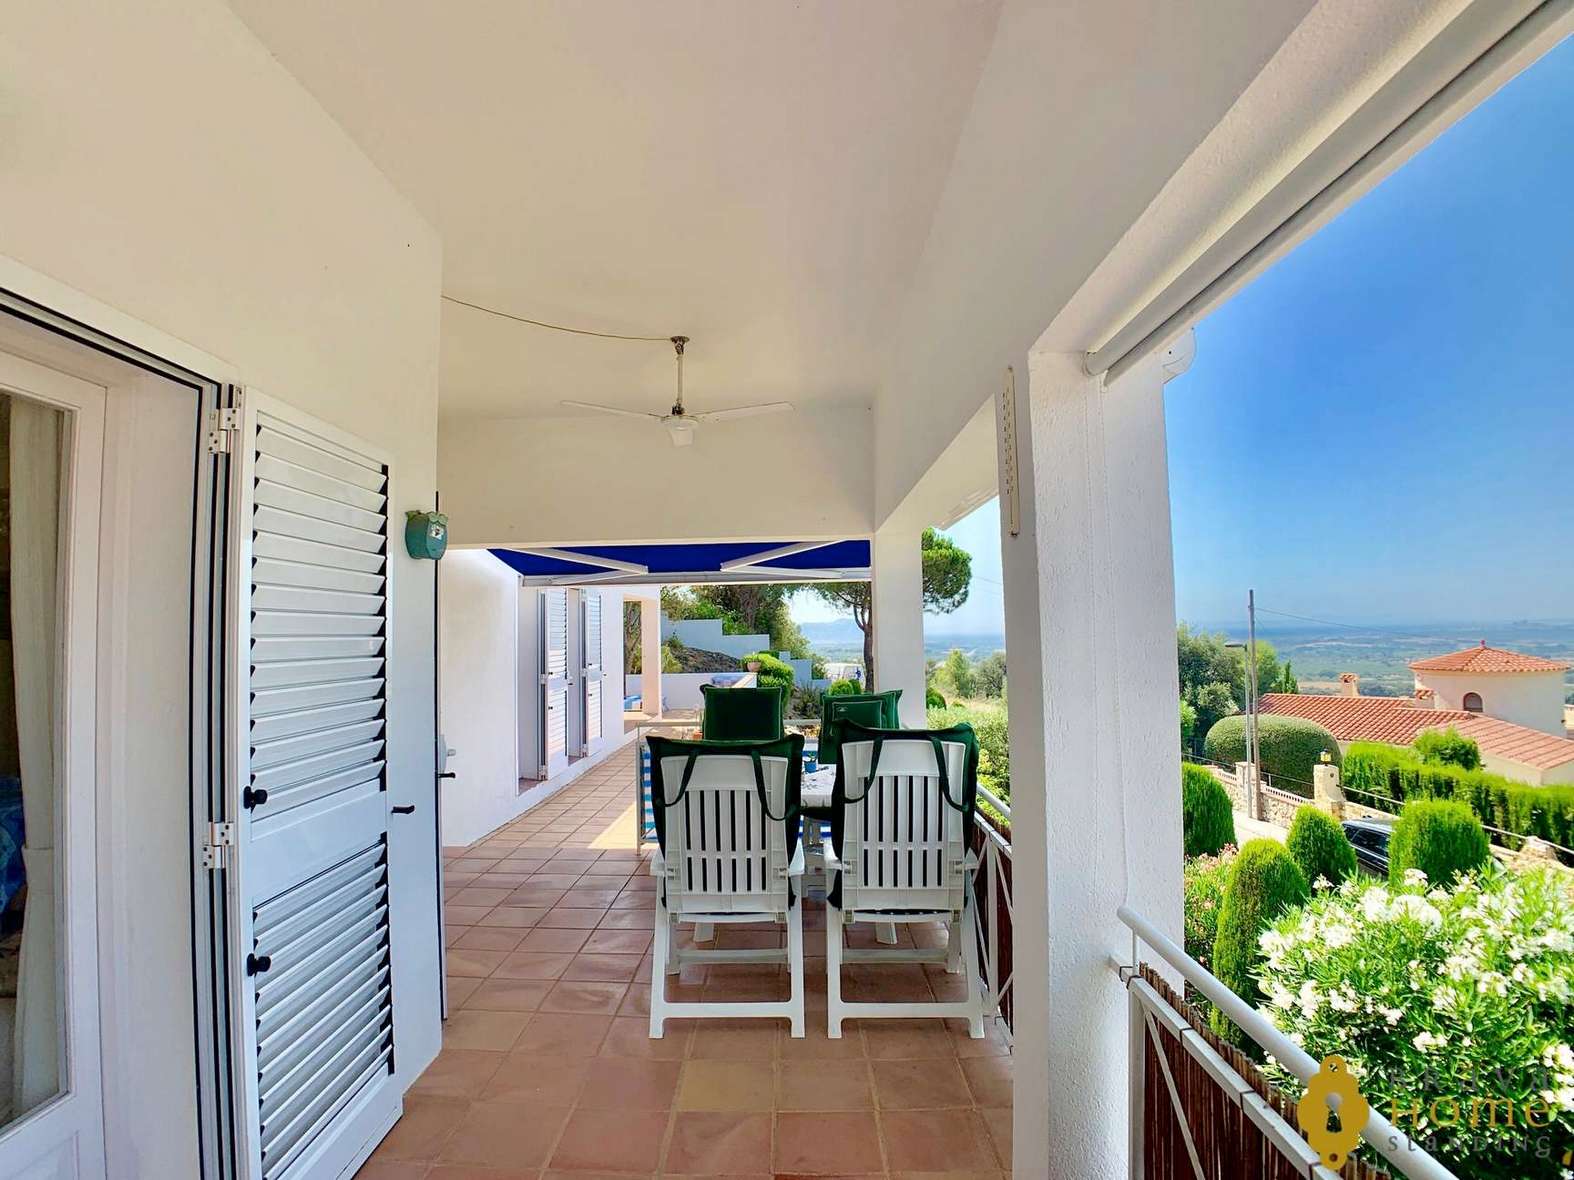 Beautiful single storey villa with sea view for sale in Palau Saverdera